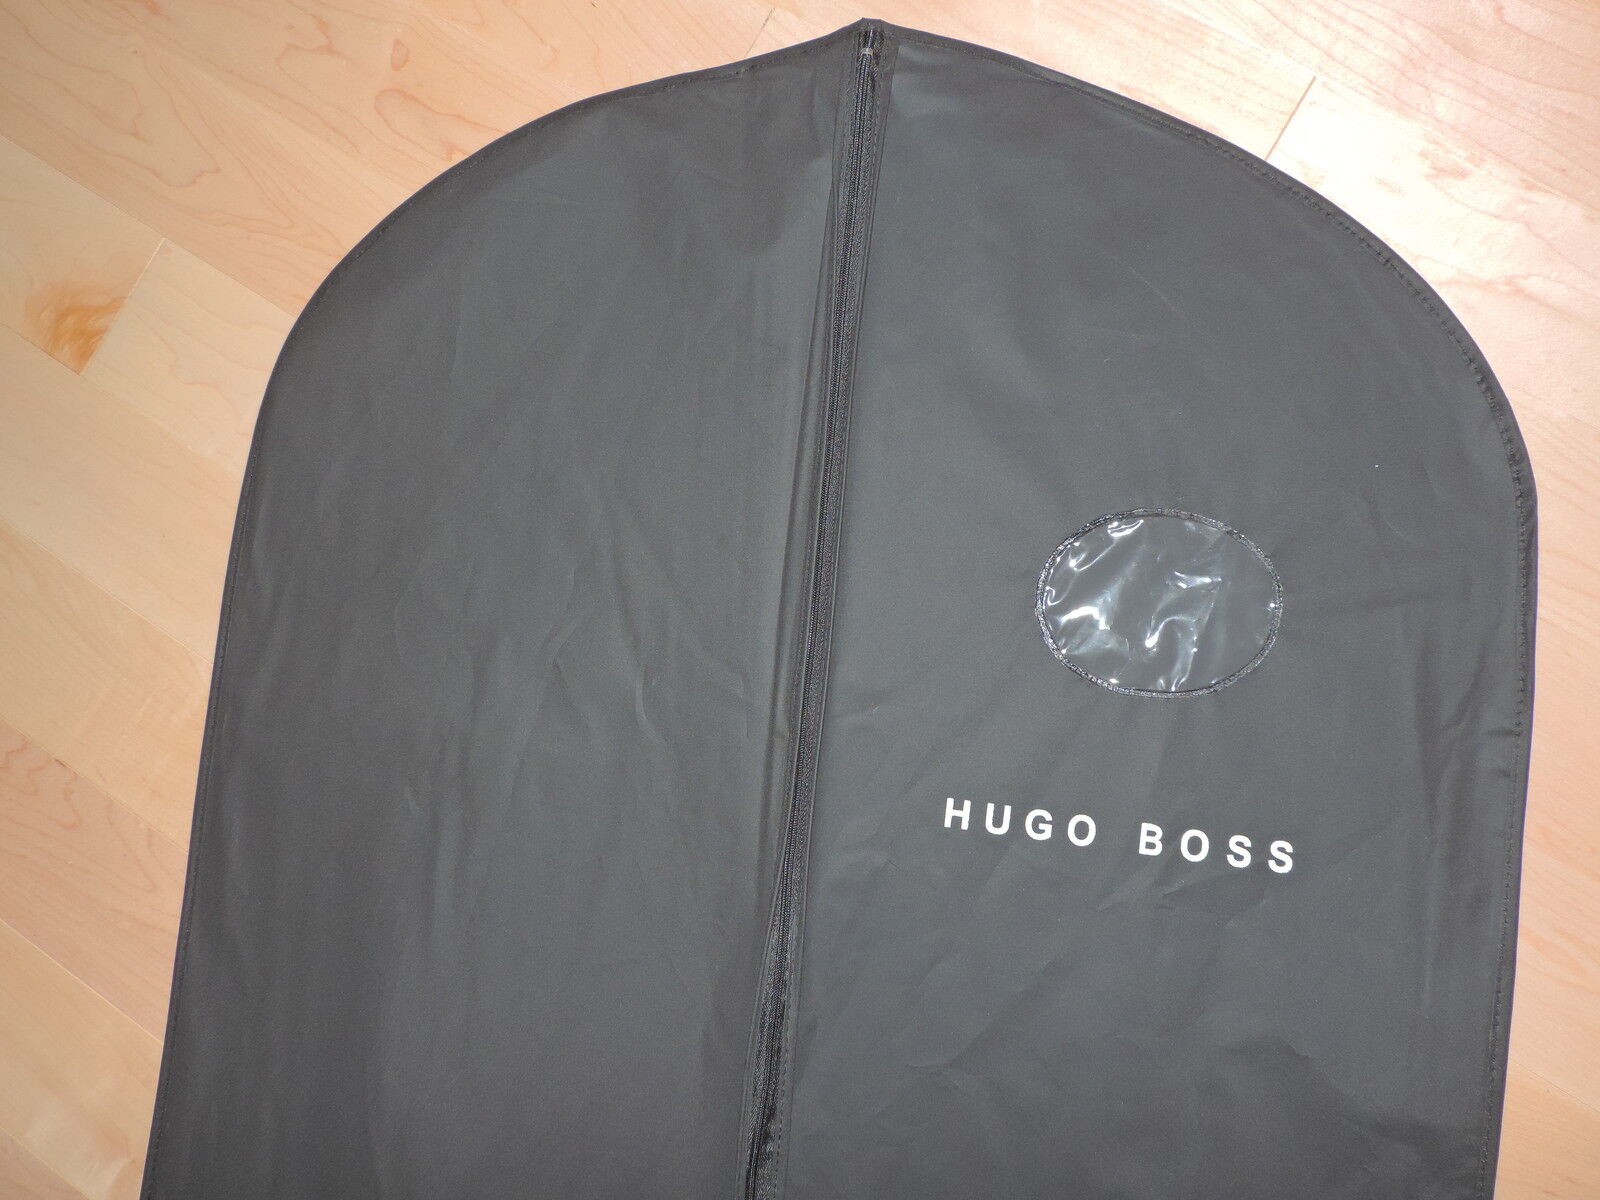 Hugo Boss Designer Black Suit Coat Protector Cover Bag Waterproof Travel Luggage